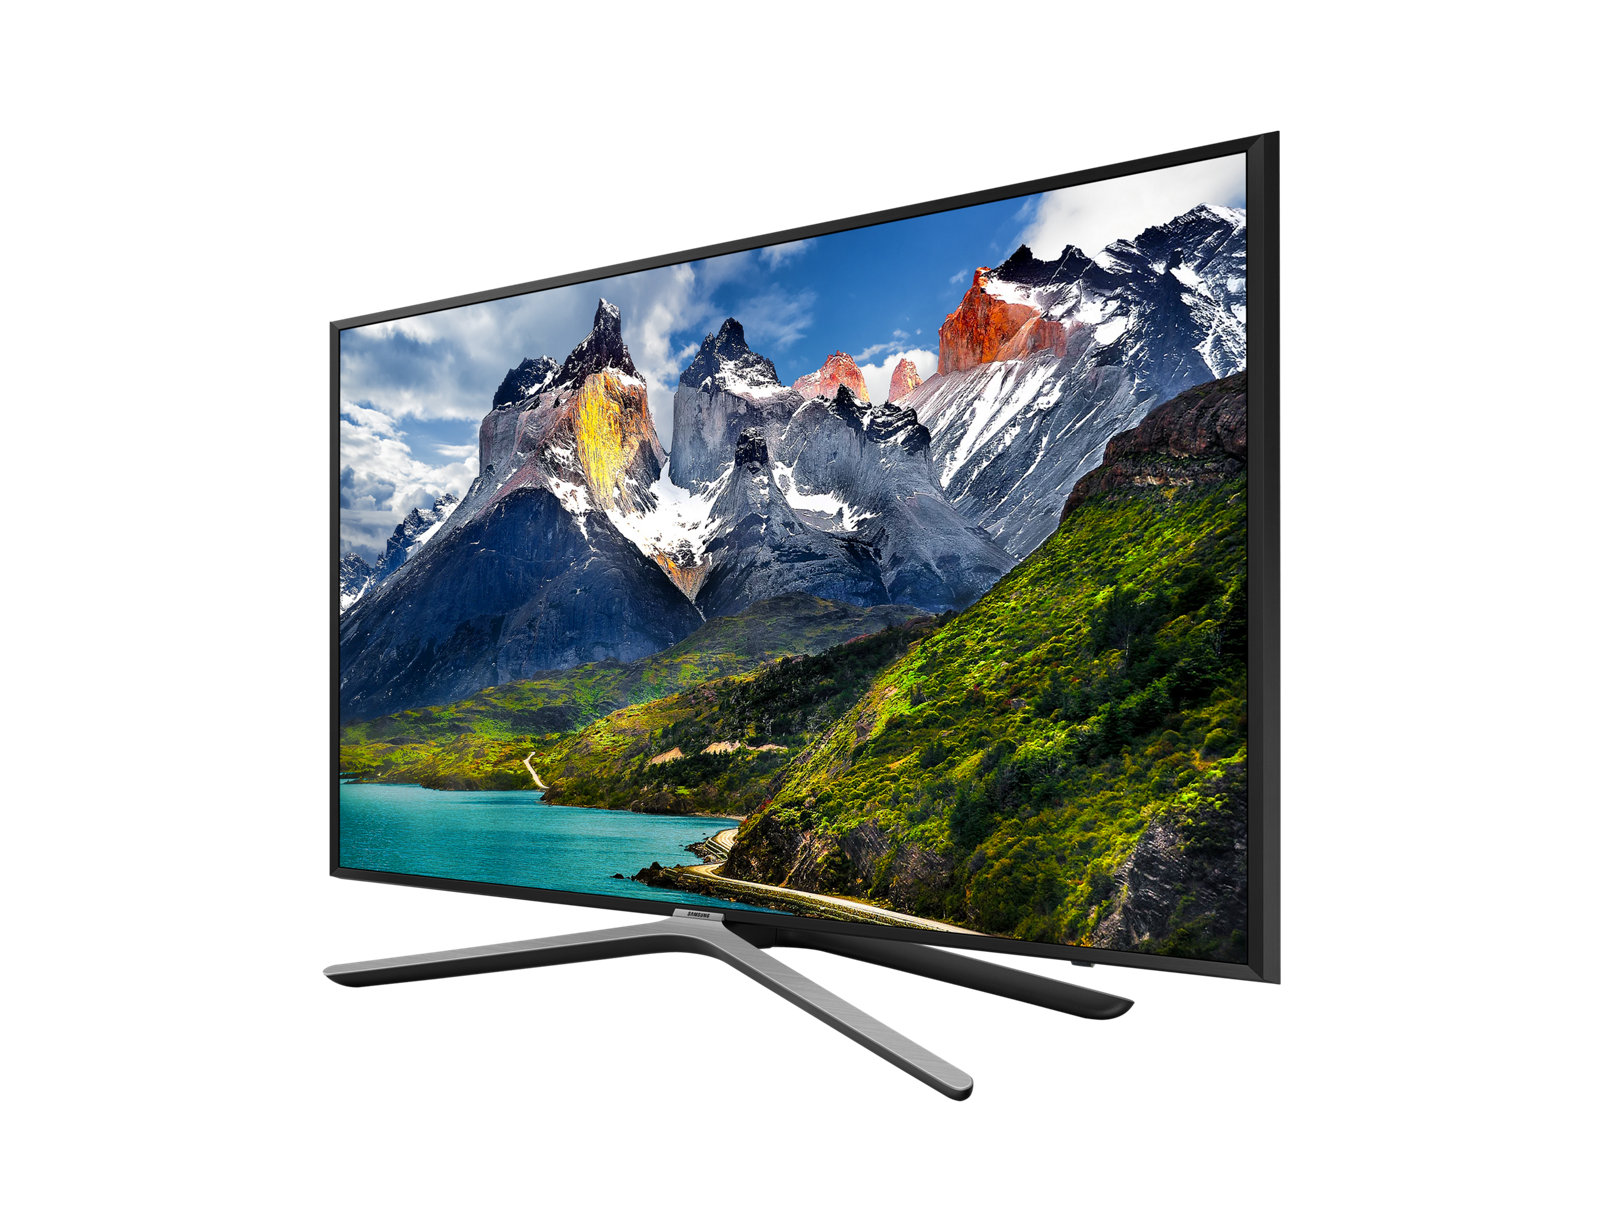 Купить телевизор без переплаты. Телевизор Samsung ue43n5510. Телевизор Samsung ue43t5300au. Samsung ue49n5500aux. Телевизор Samsung ue43n5500au.